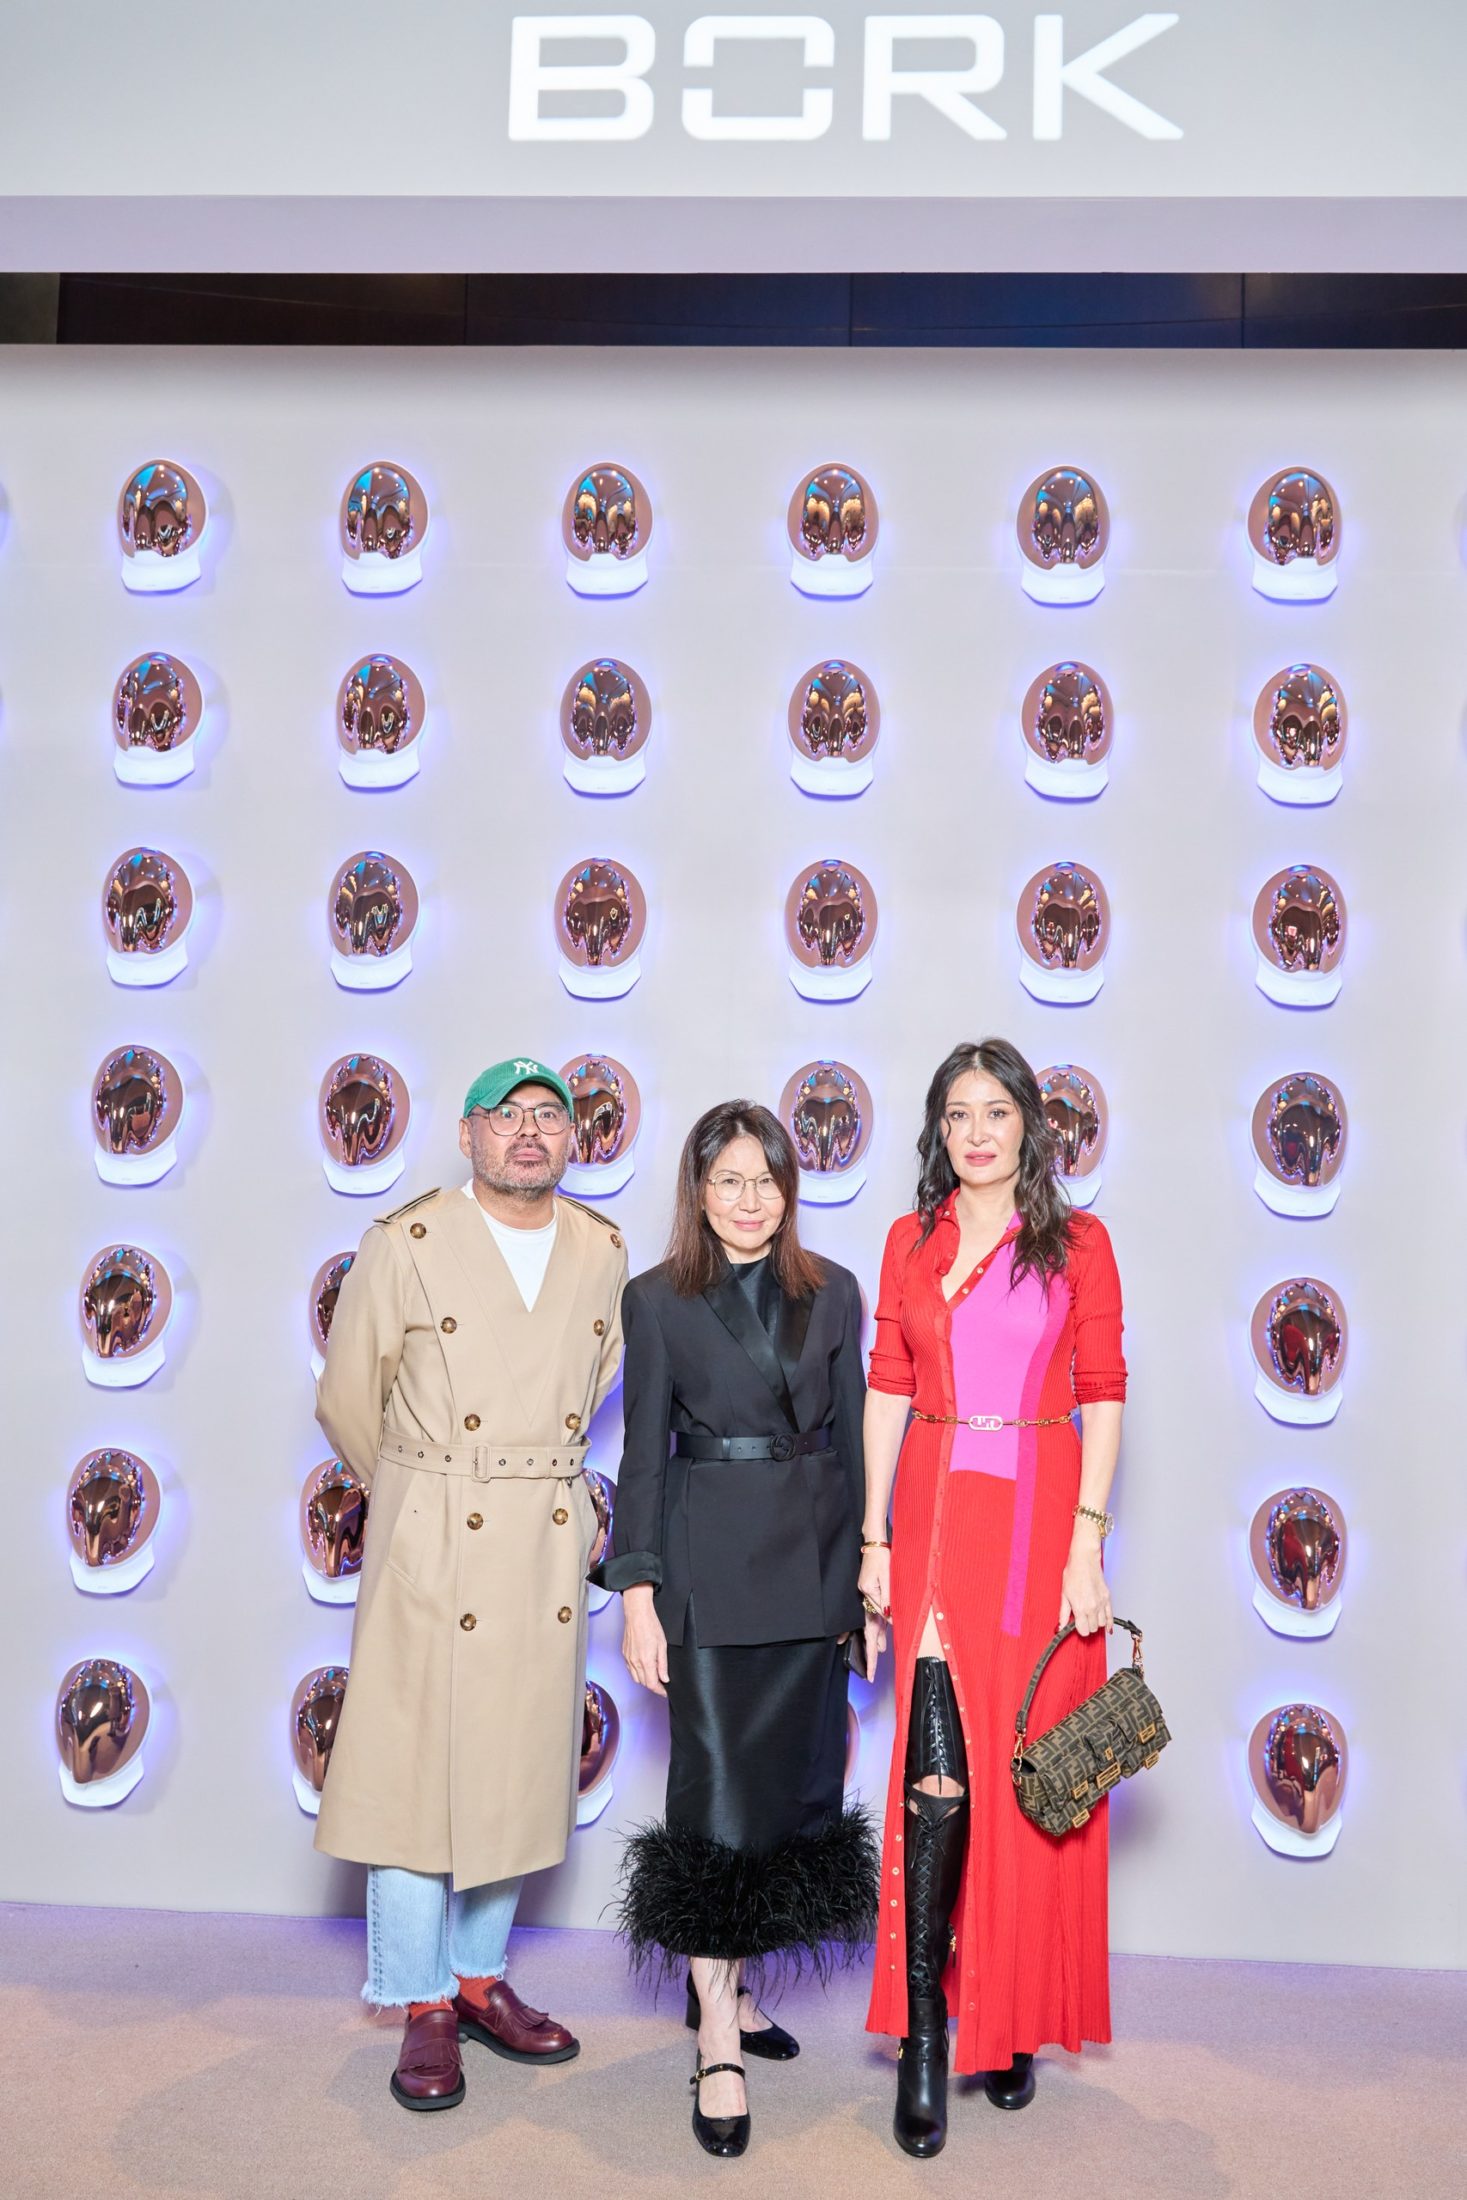 Visa Fashion Week Almaty